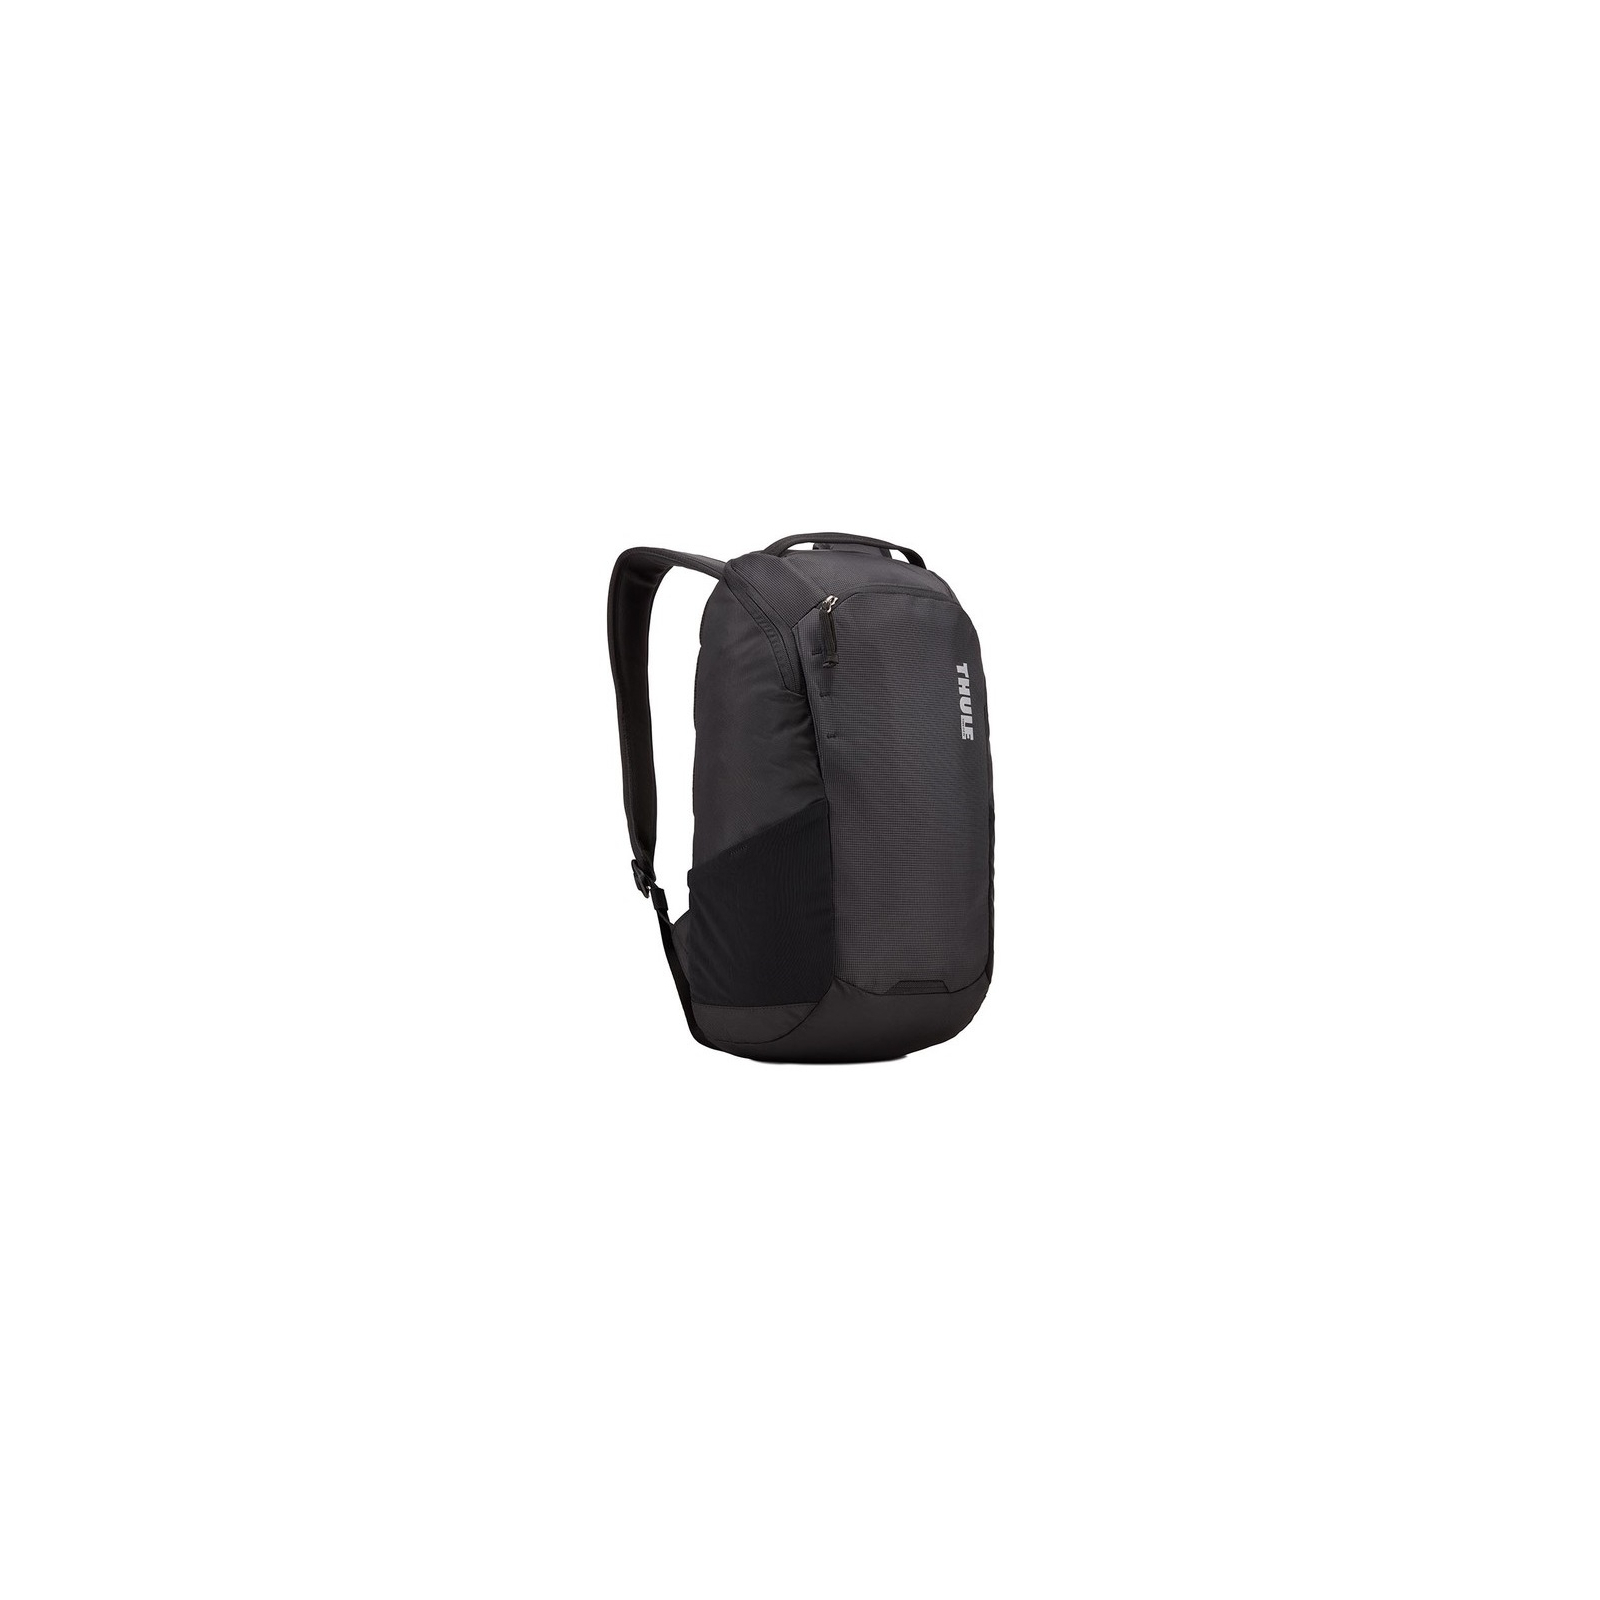 Рюкзак для ноутбука Thule 13" EnRoute 14L TEBP-313 (Teal) (3203589)